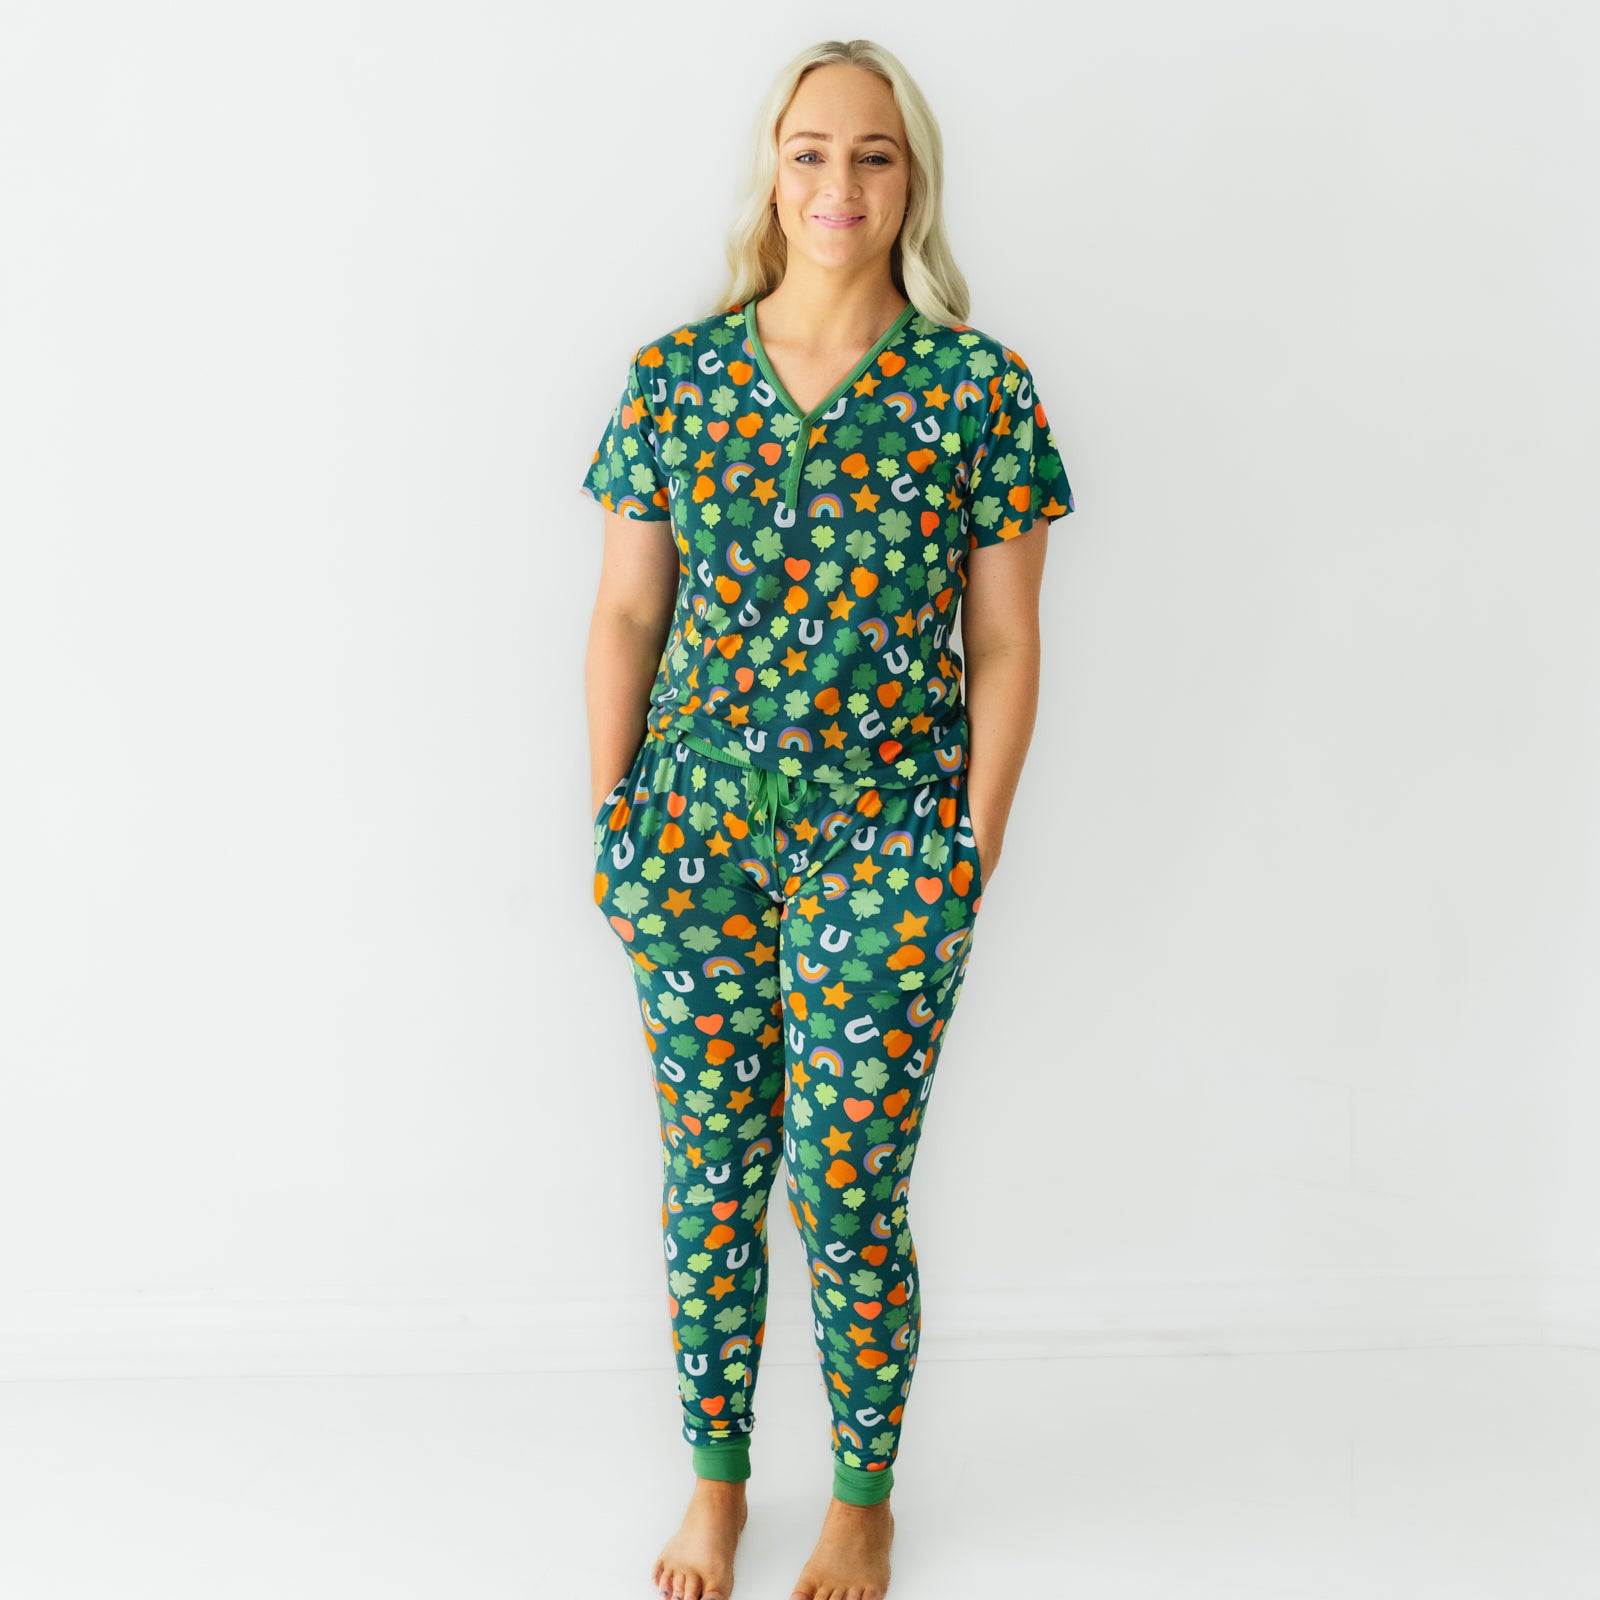 Woman wearing a women's Lucky printed pajama top and matching pajama pants